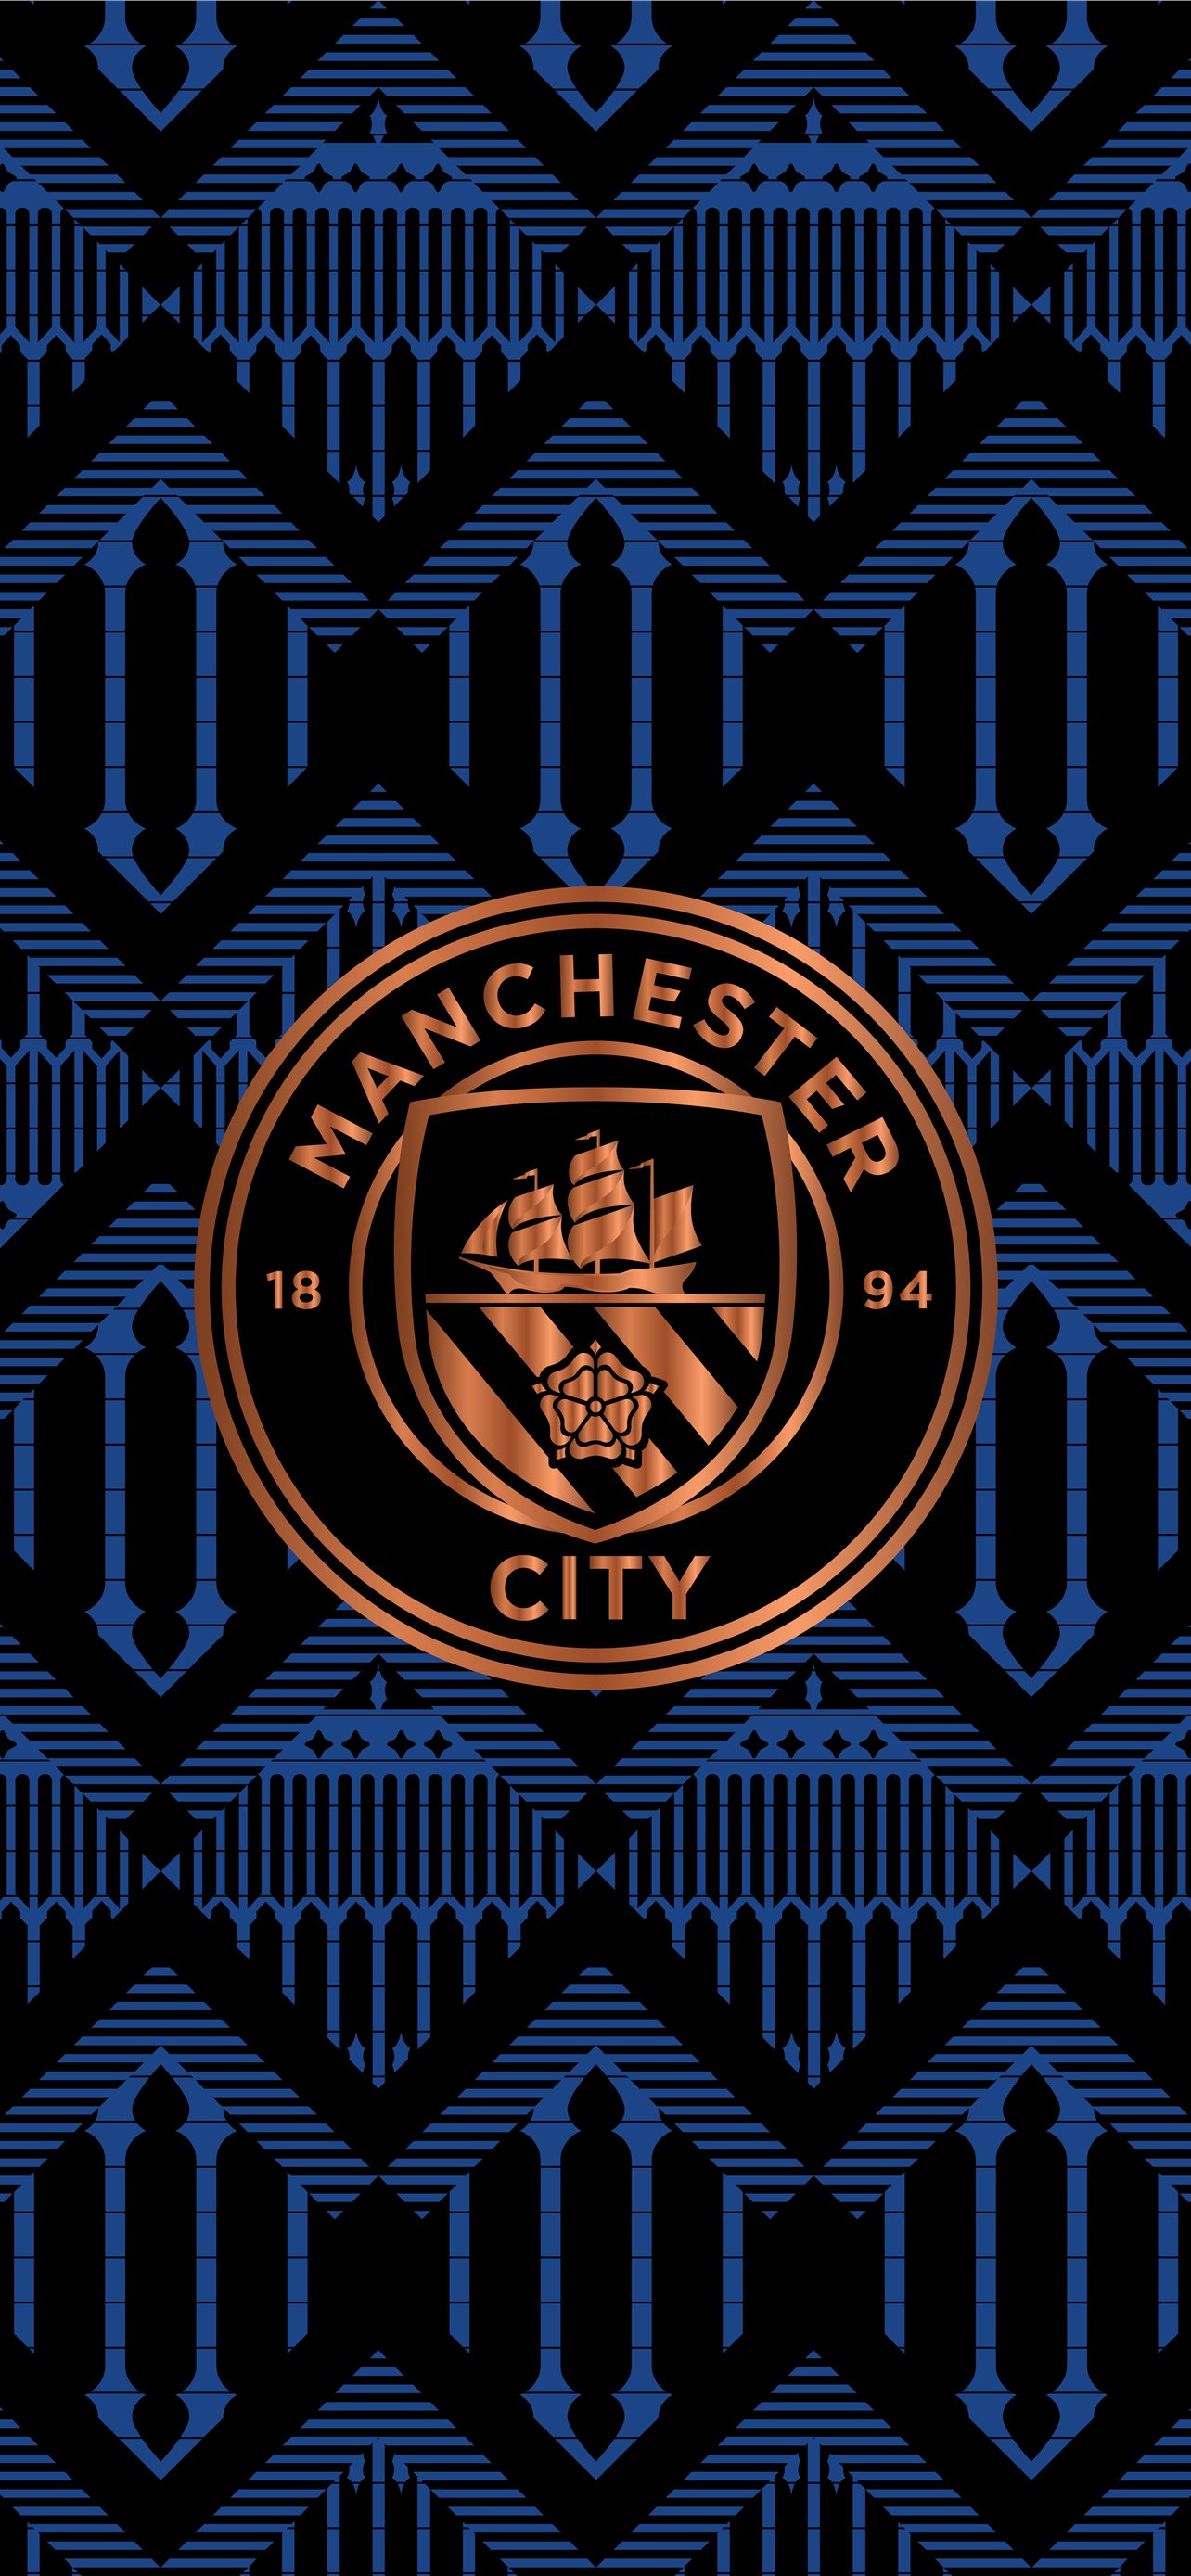 MCFCVN  Hình nền cho ace 3  Manchester City FC  Việt Nam  Facebook